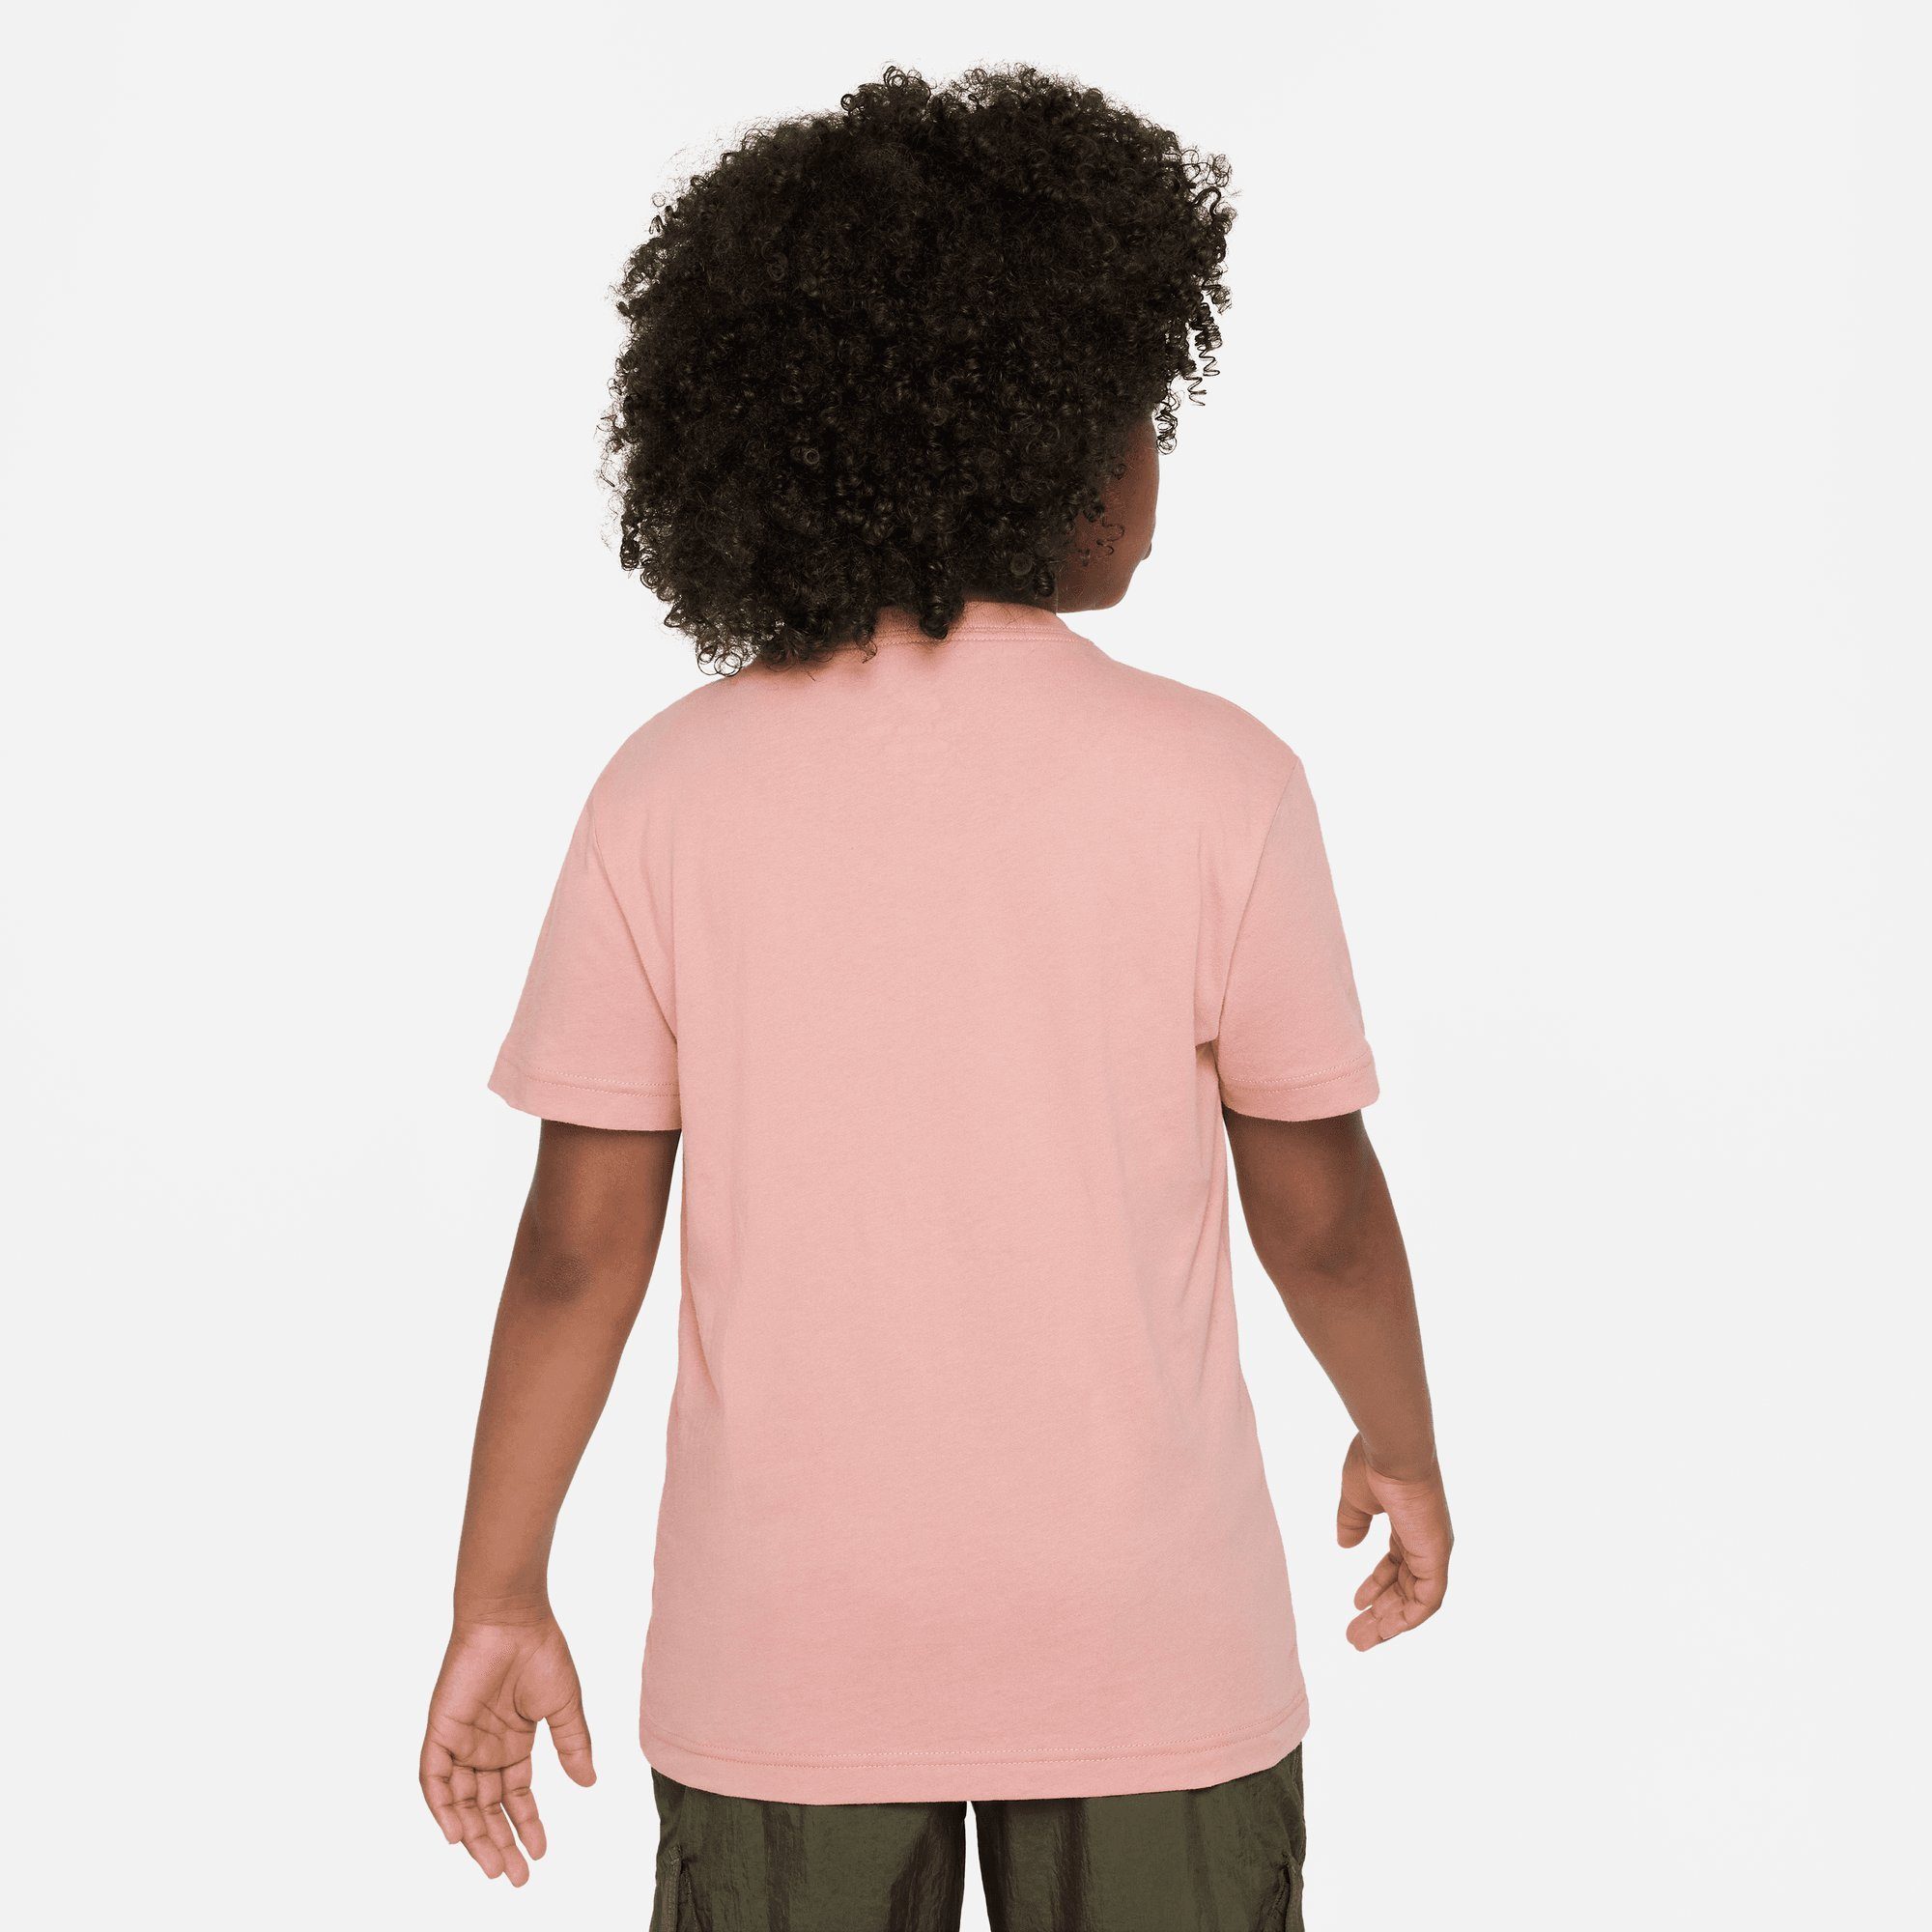 T-SHIRT T-Shirt Nike STARDUST Sportswear BIG KIDS' (GIRLS) RED